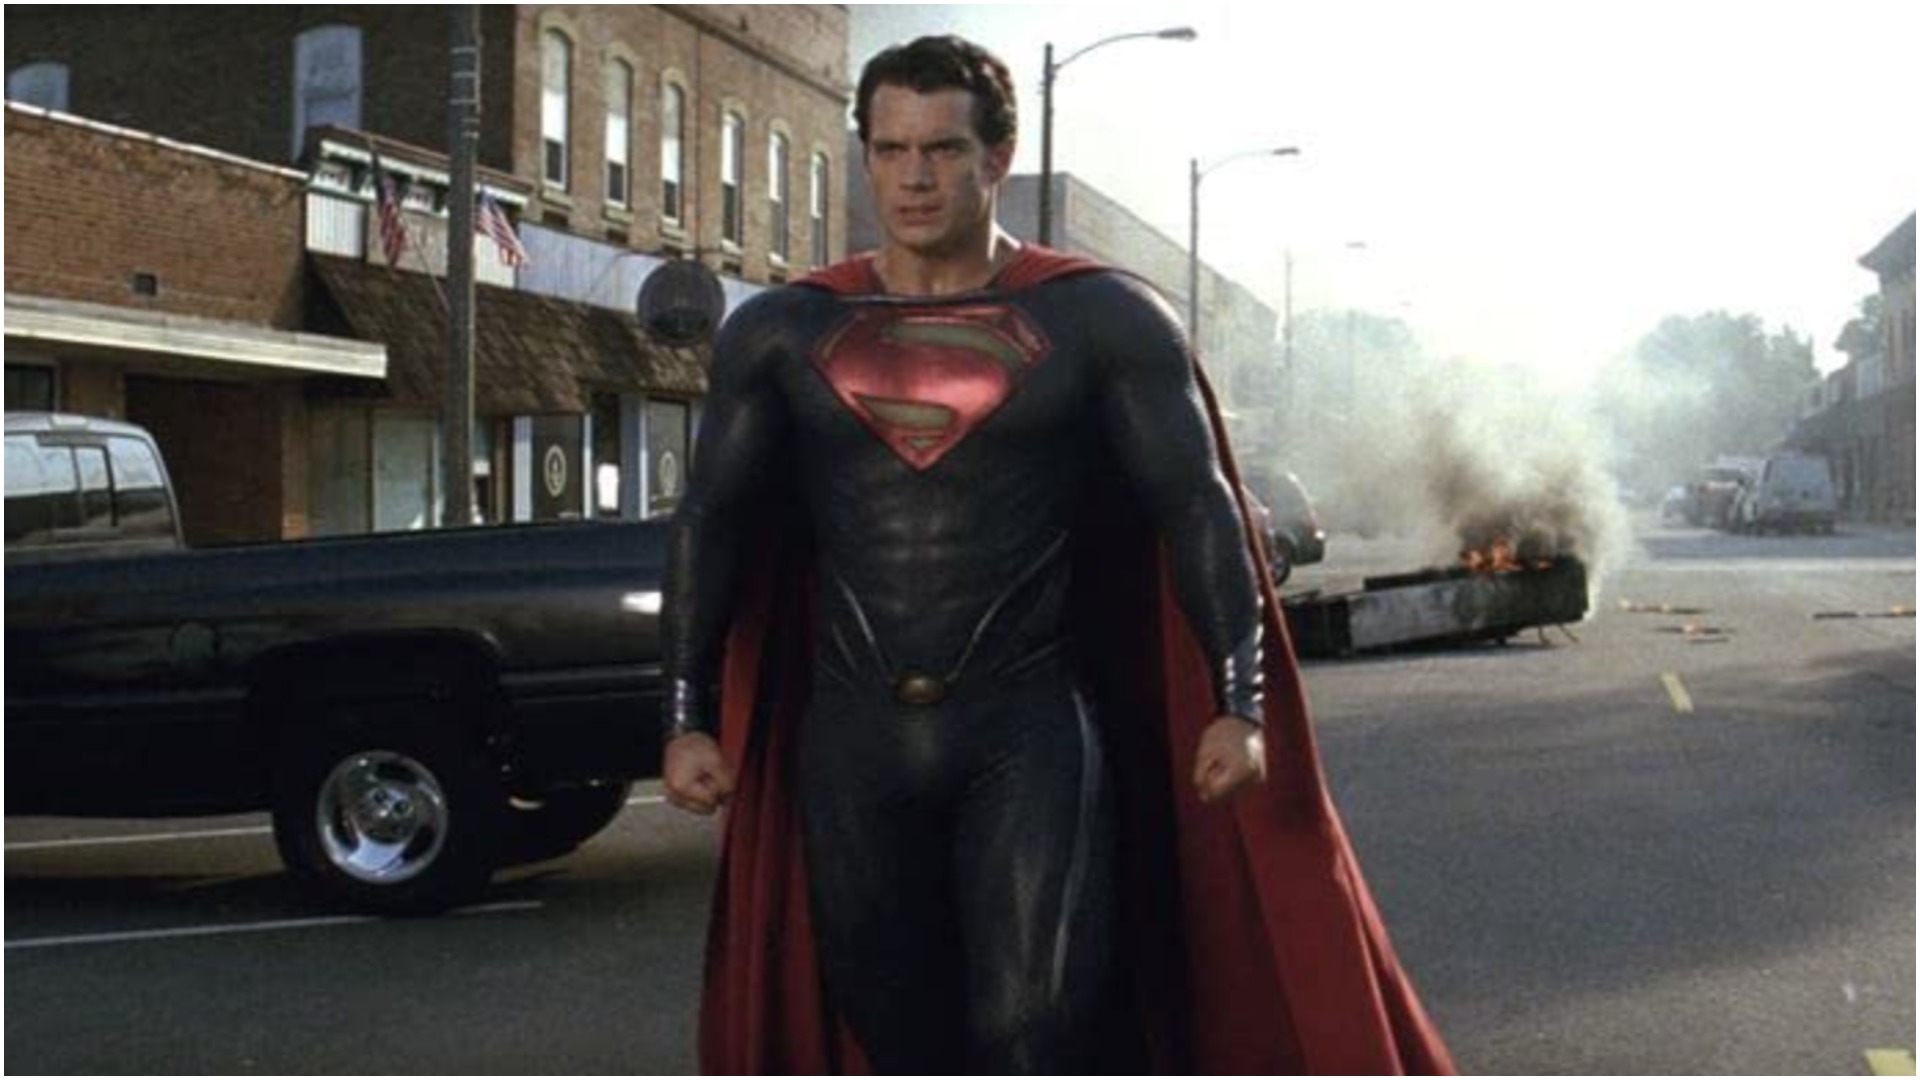 Black Adam Producer Says Black Adam vs. Superman Will Be 'Long-Form'  Storytelling